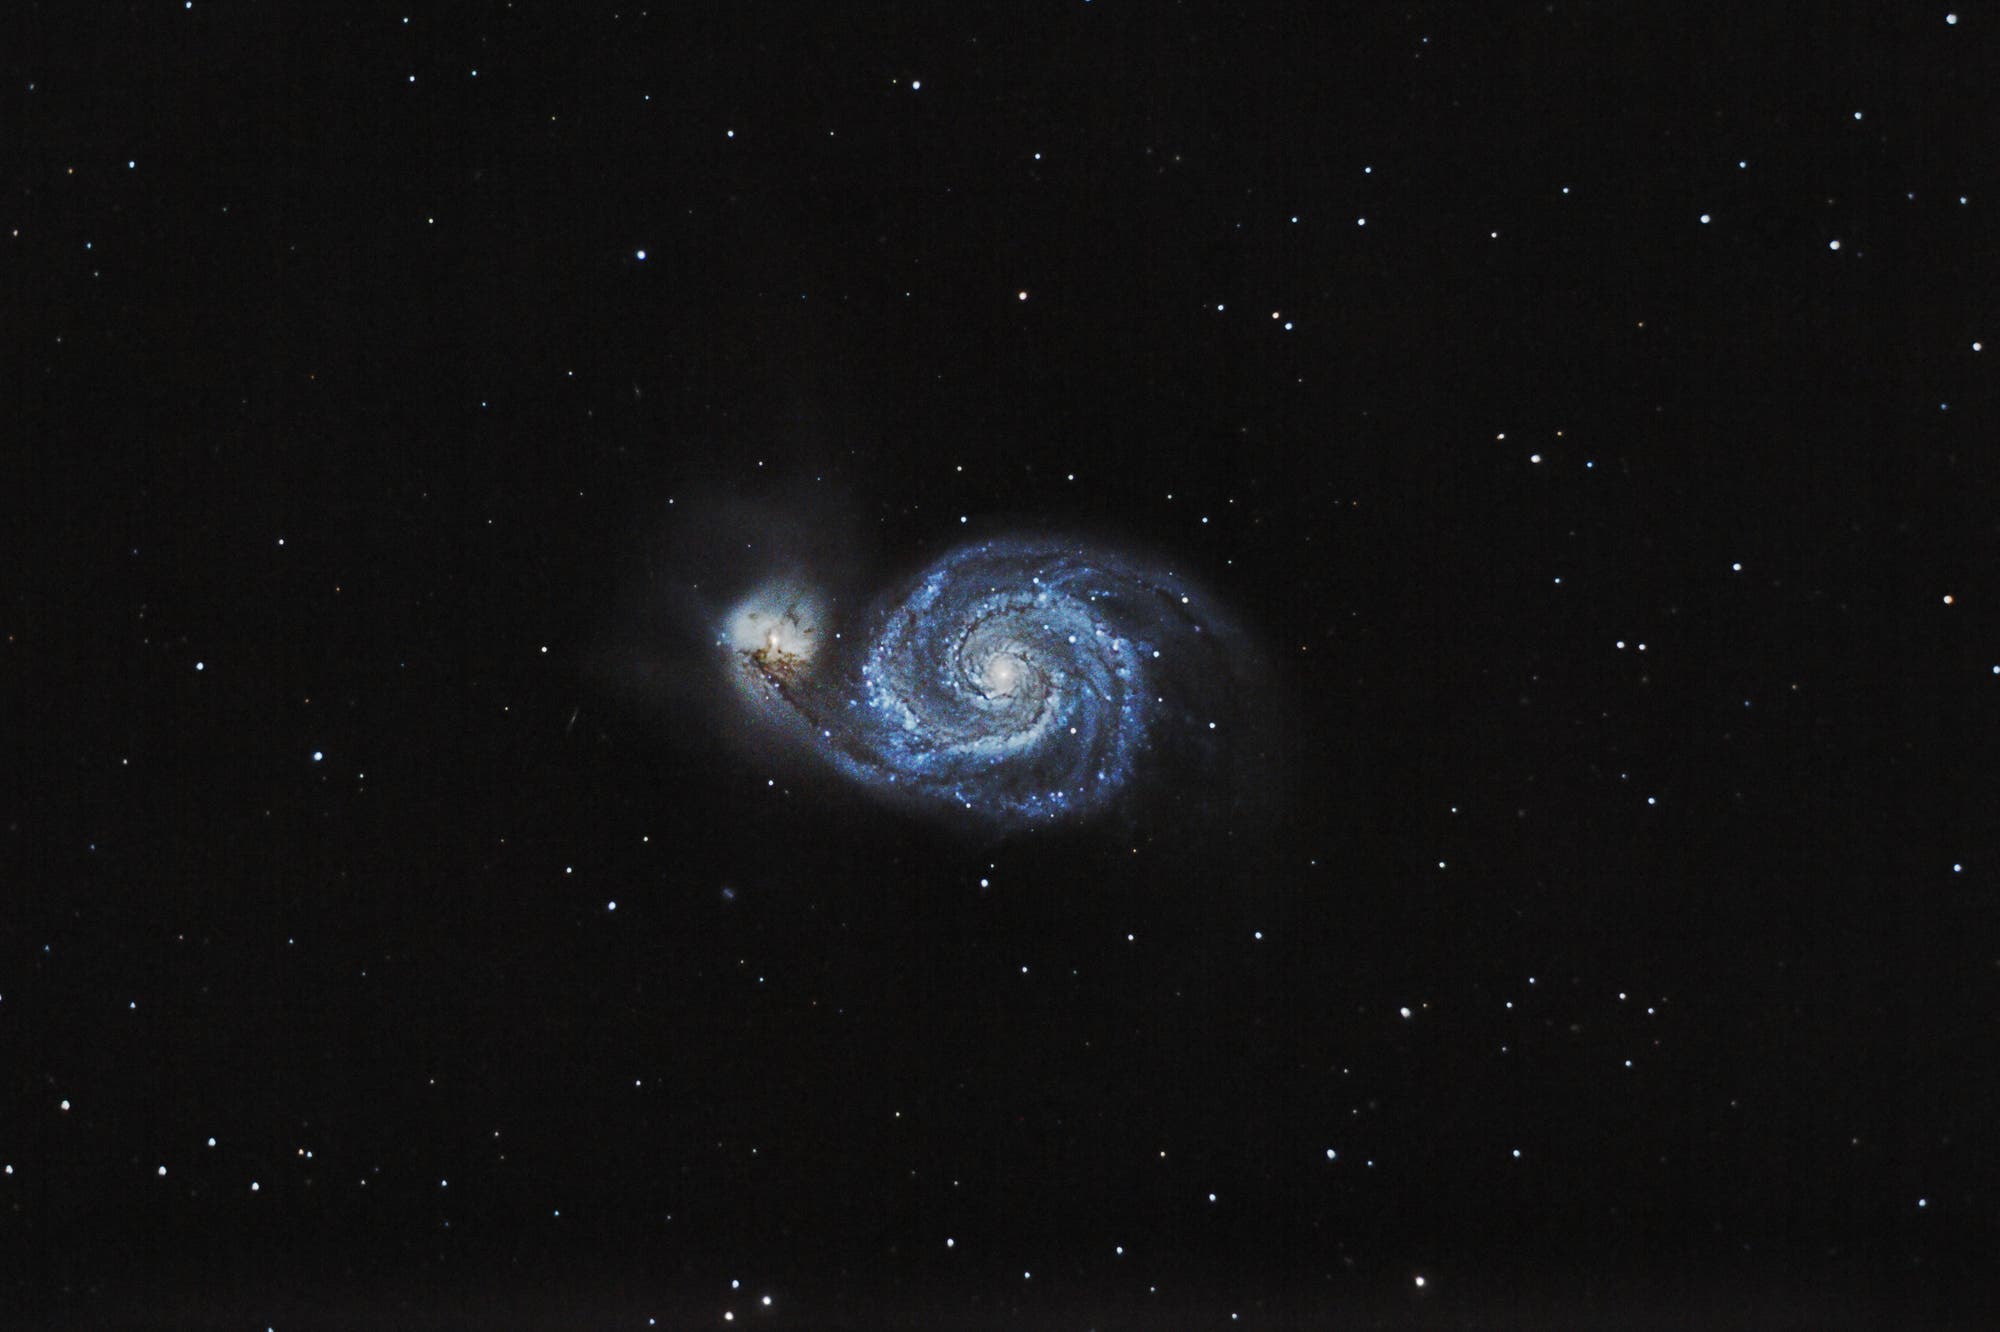 Whirlpool Galaxy M 51